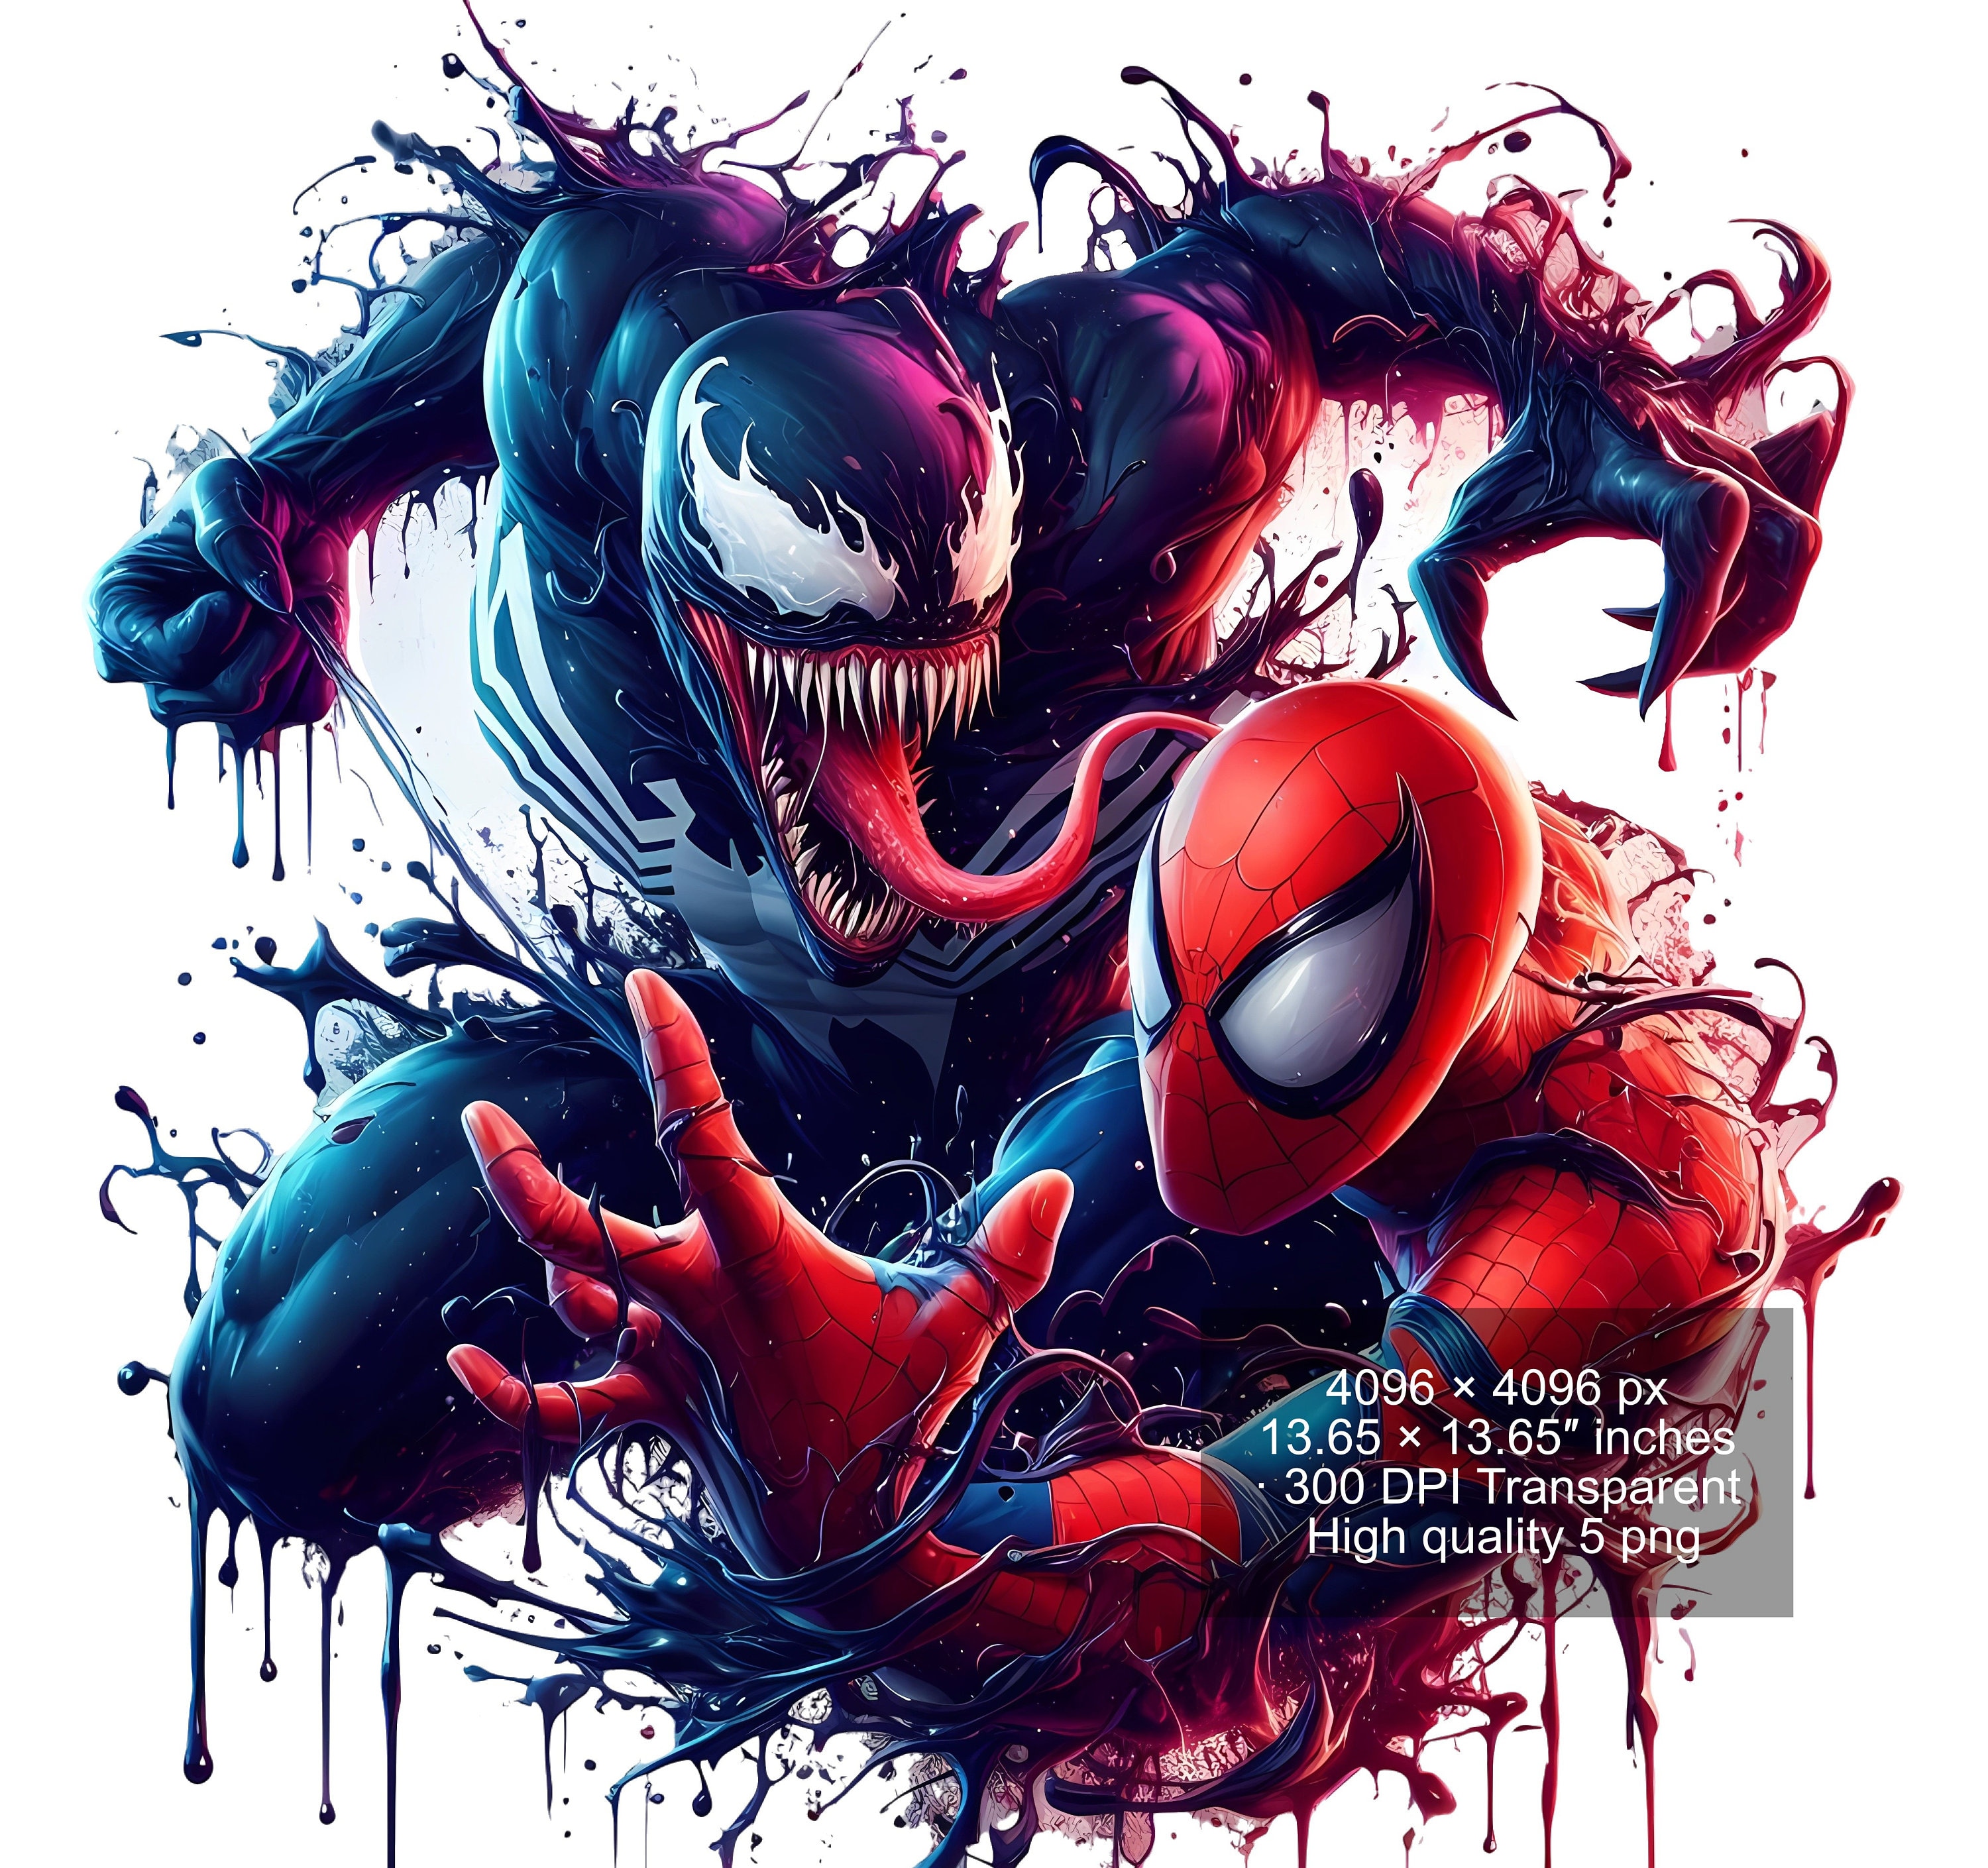 Superhero Spider and His Amazing Friends Wallpaper Peel Stick